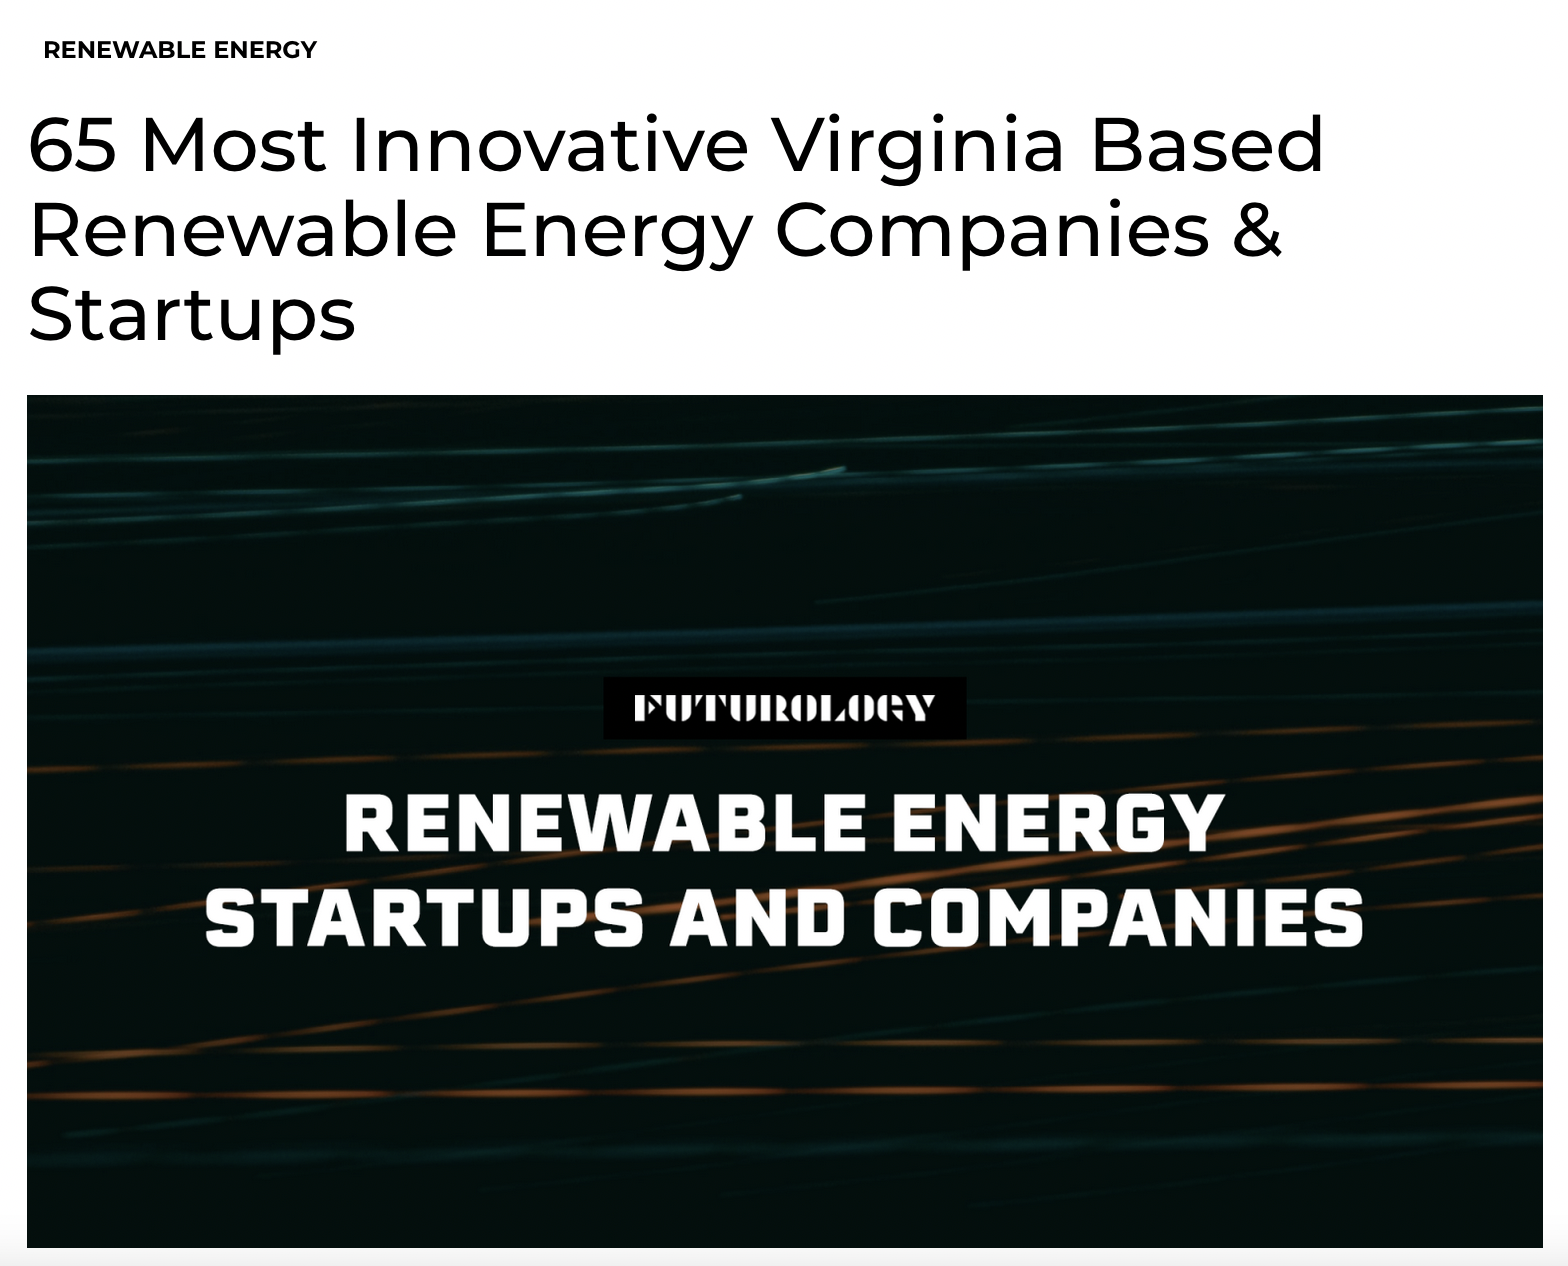 Tigercomm Named Among Top Renewable Energy Companies in Virginia